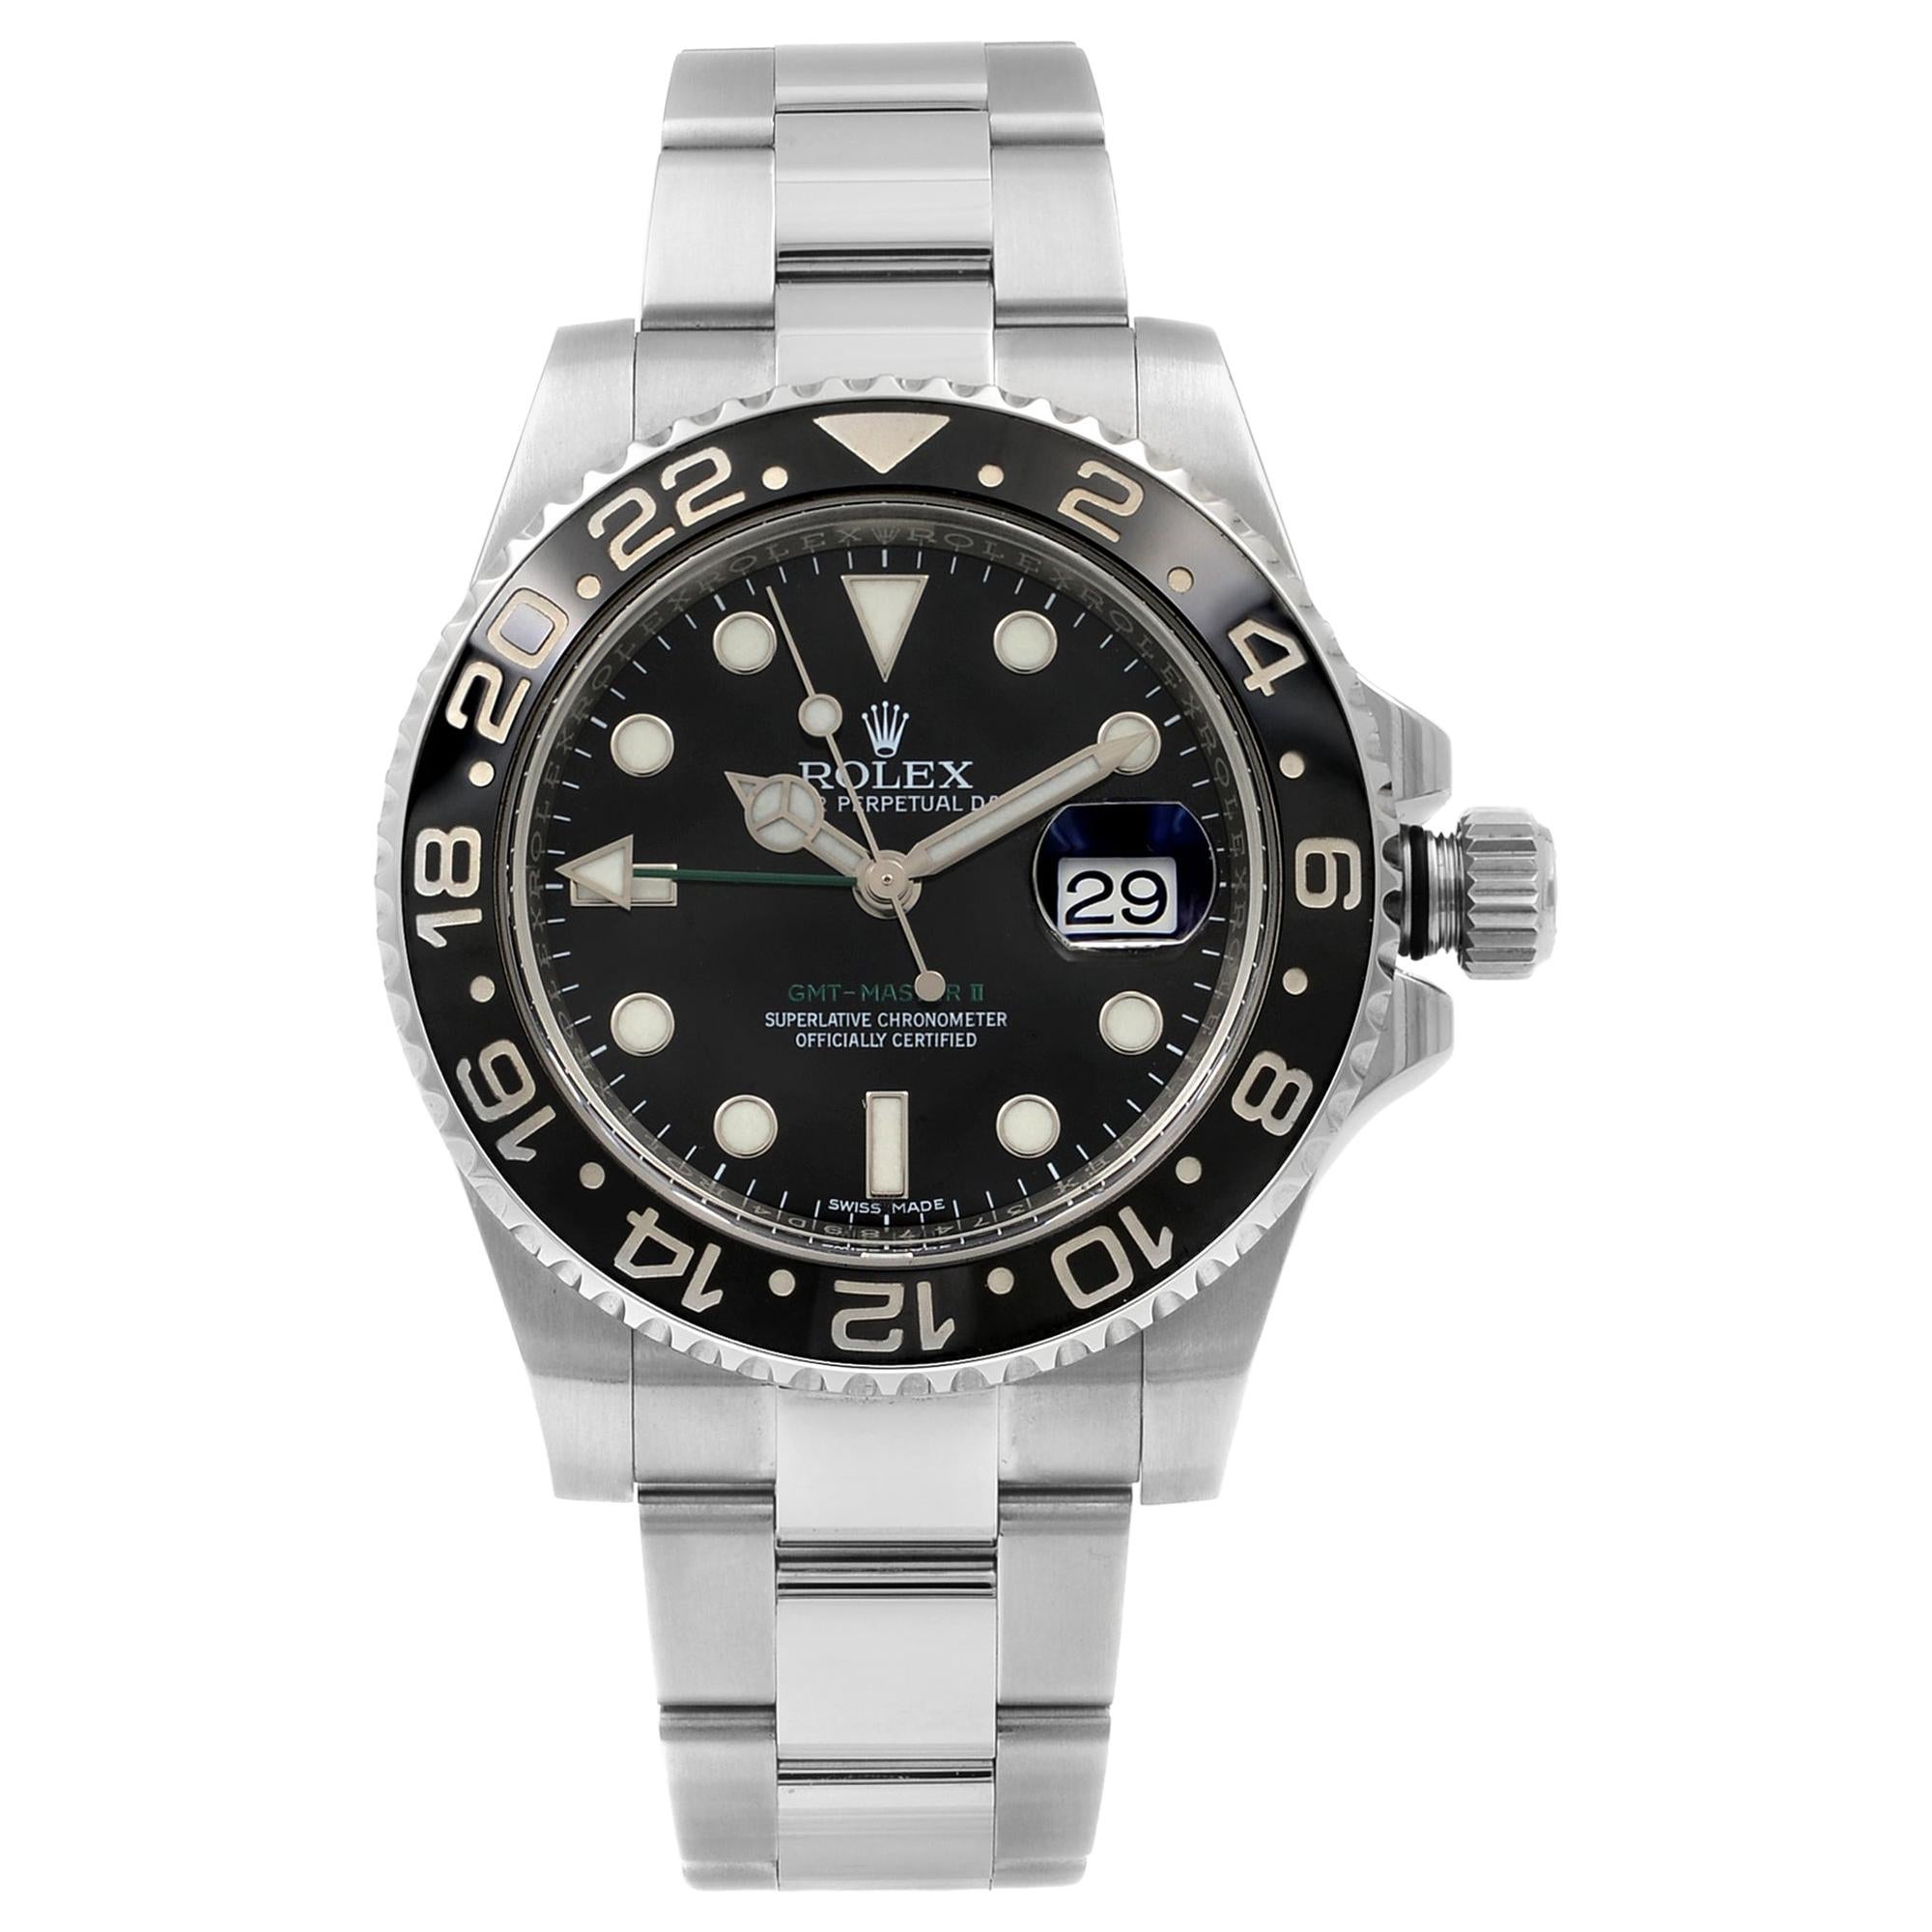 Rolex GMT-Master II Steel Black Dial Green Hand Automatic Men's Watch 116710LN